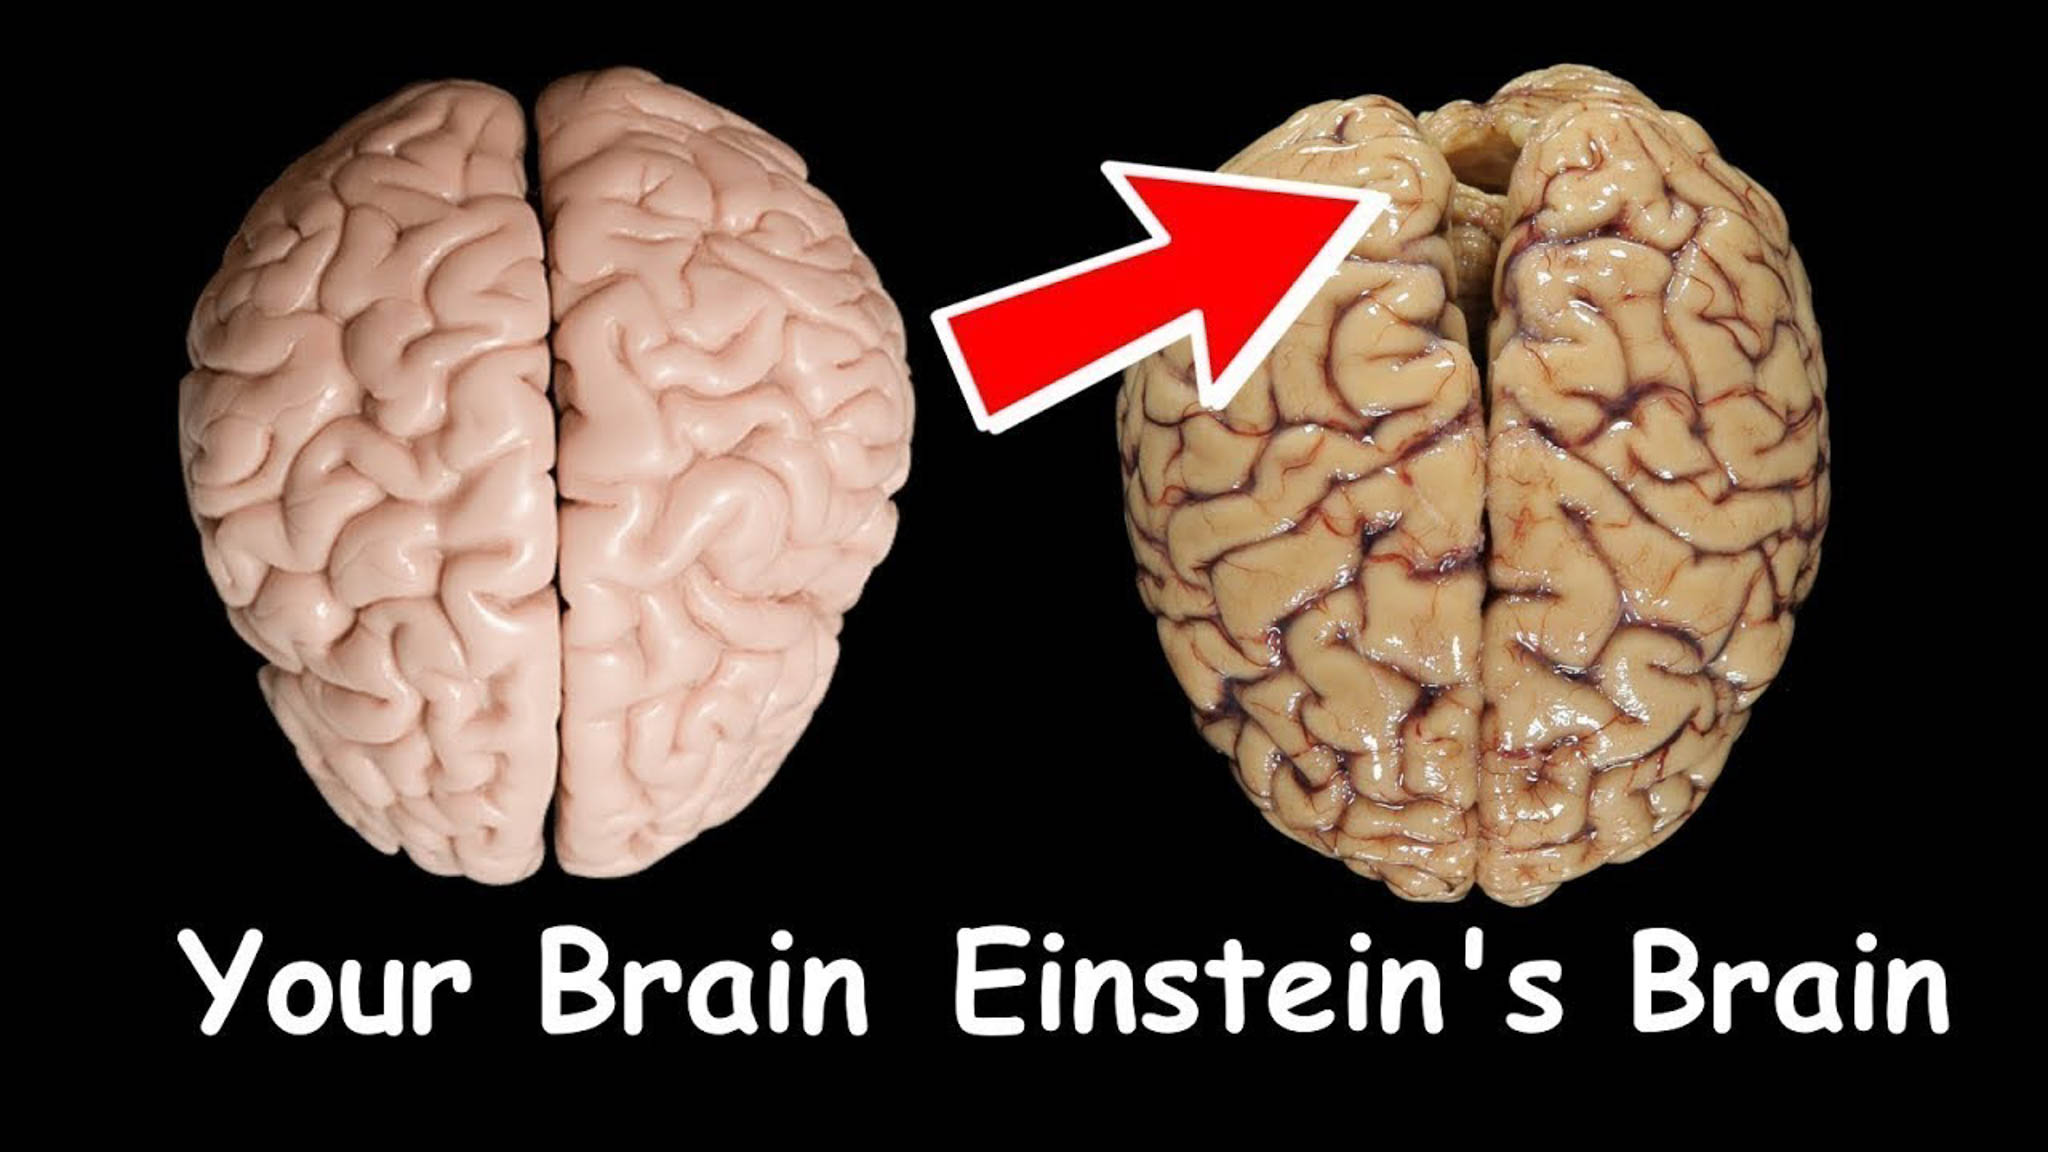 He is a brain. Мозг Эйнштейна.